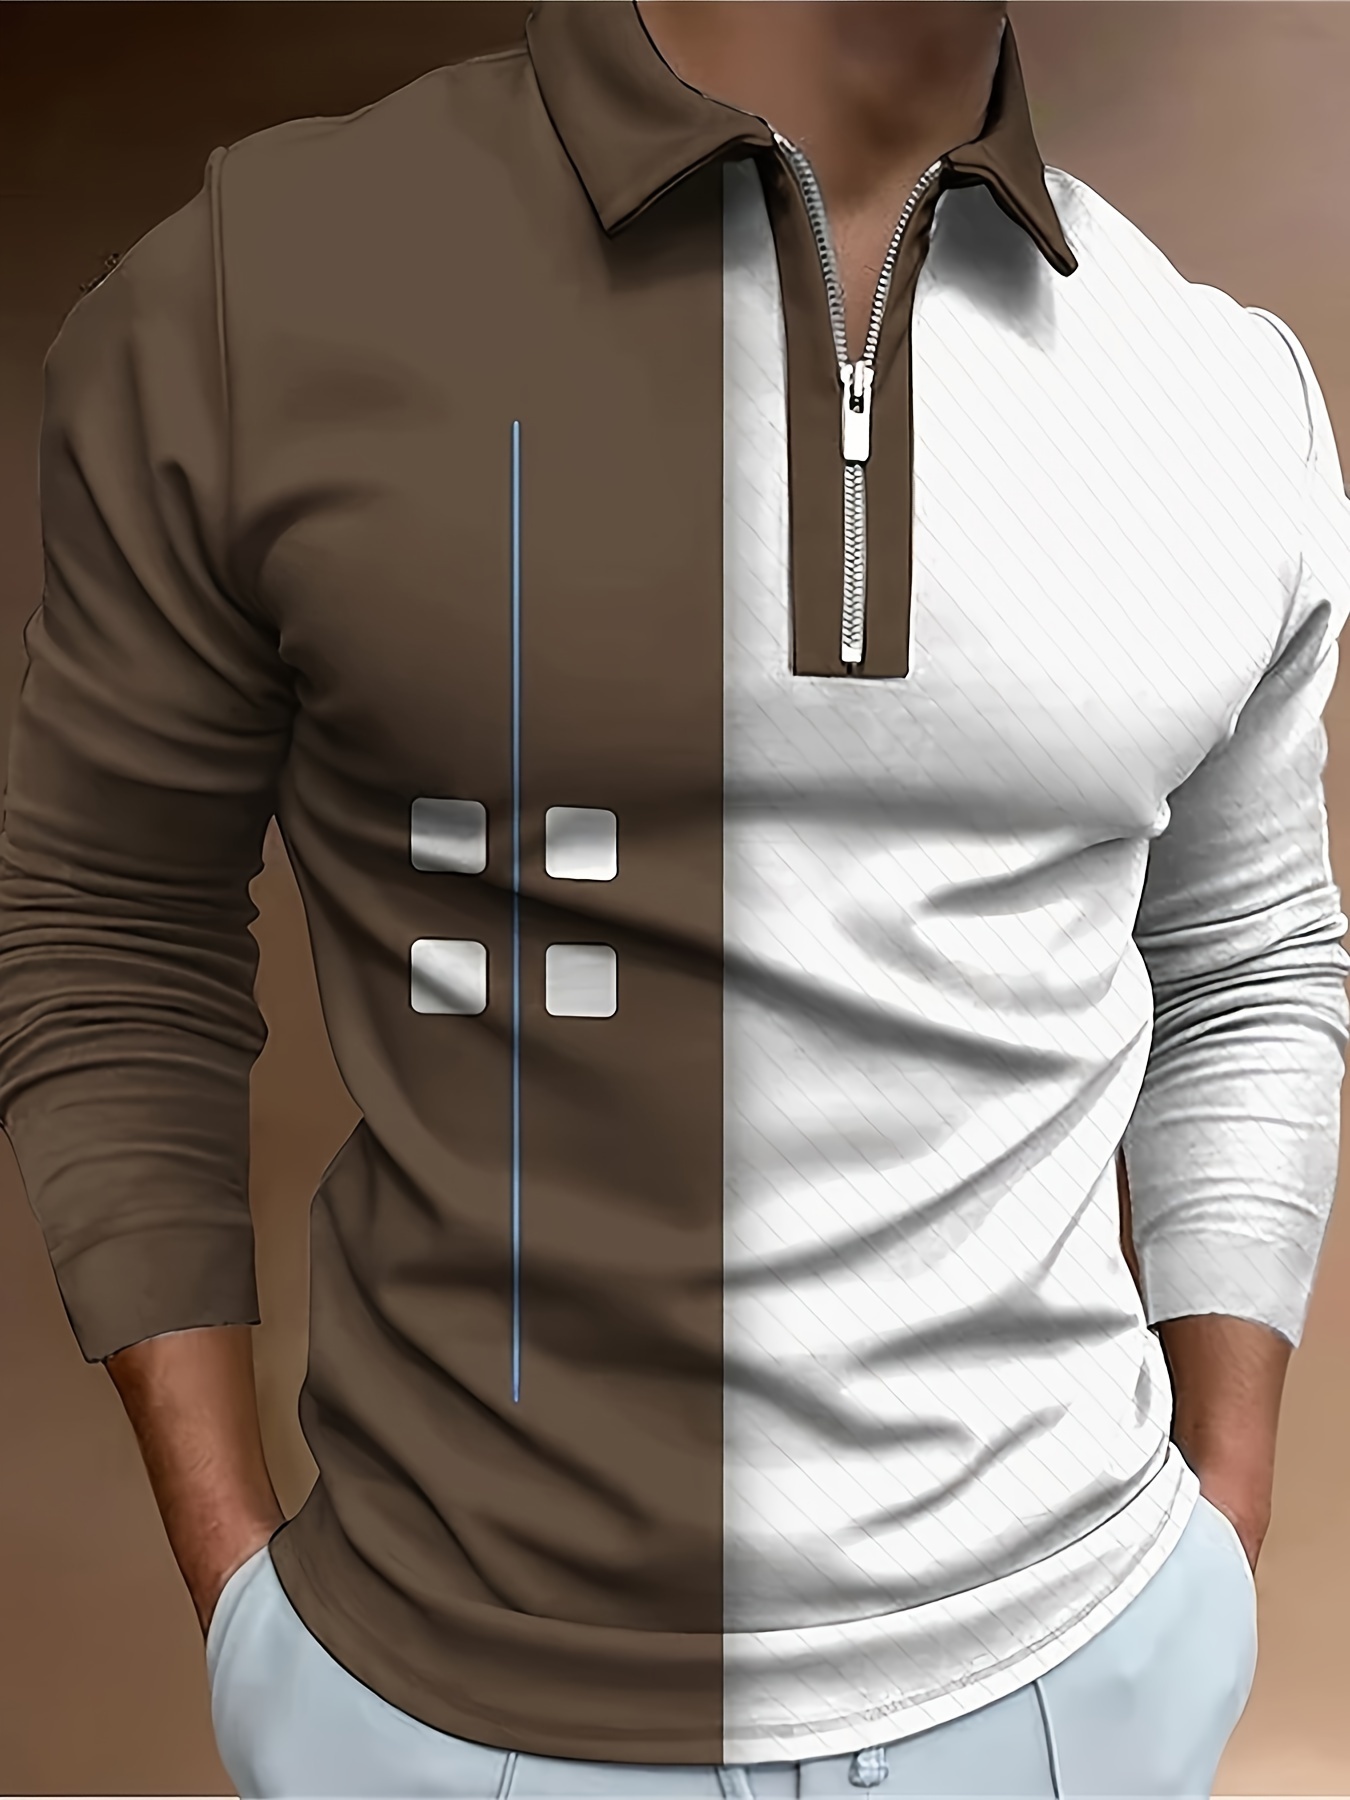 Buy Men's Fashion Design Lapel Long Sleeve Polo Shirt Colorblock